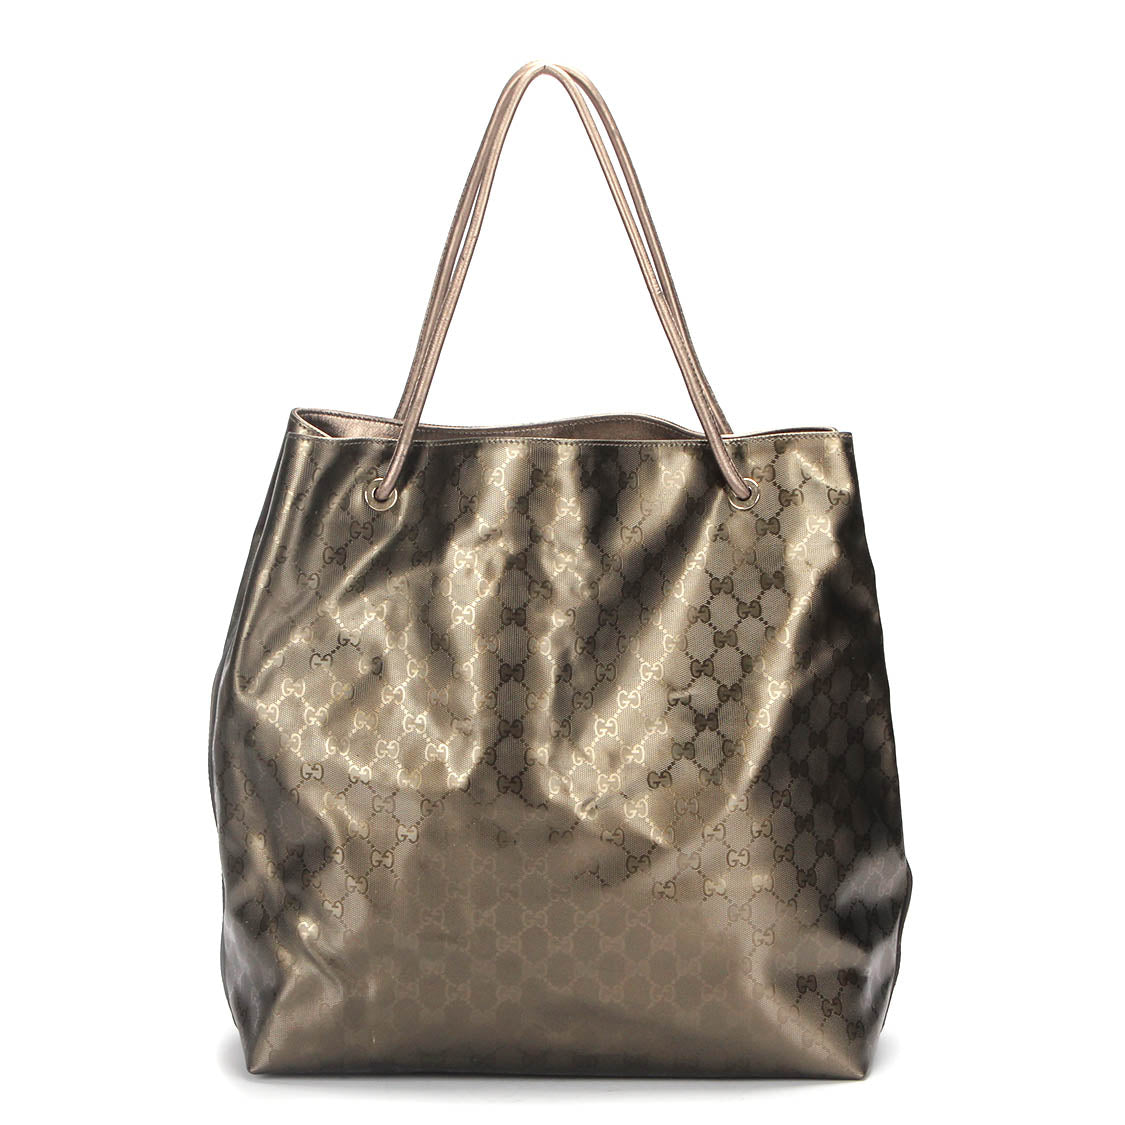 Gucci GG Imprime Gifford Tote Bag Canvas Tote Bag 257271 in Good condition